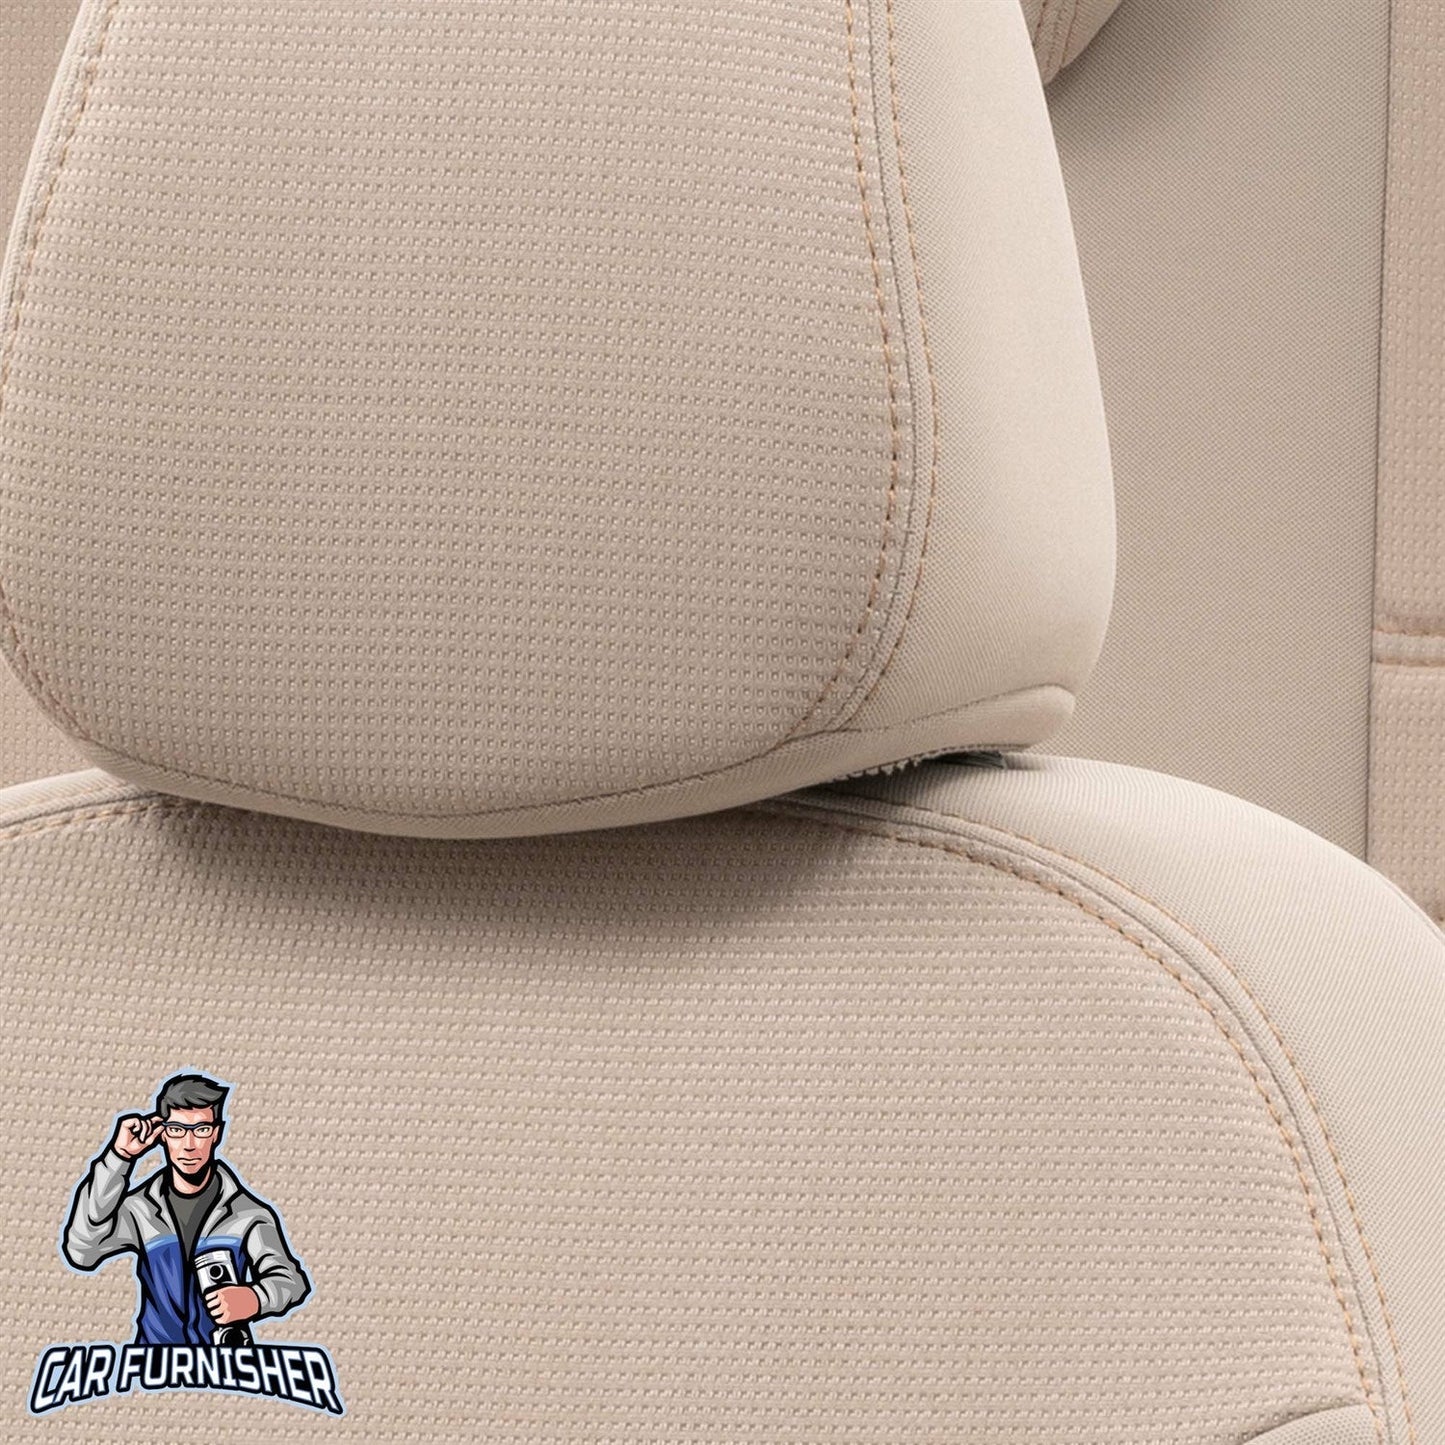 Seat Cordoba Seat Covers Original Jacquard Design Beige Jacquard Fabric